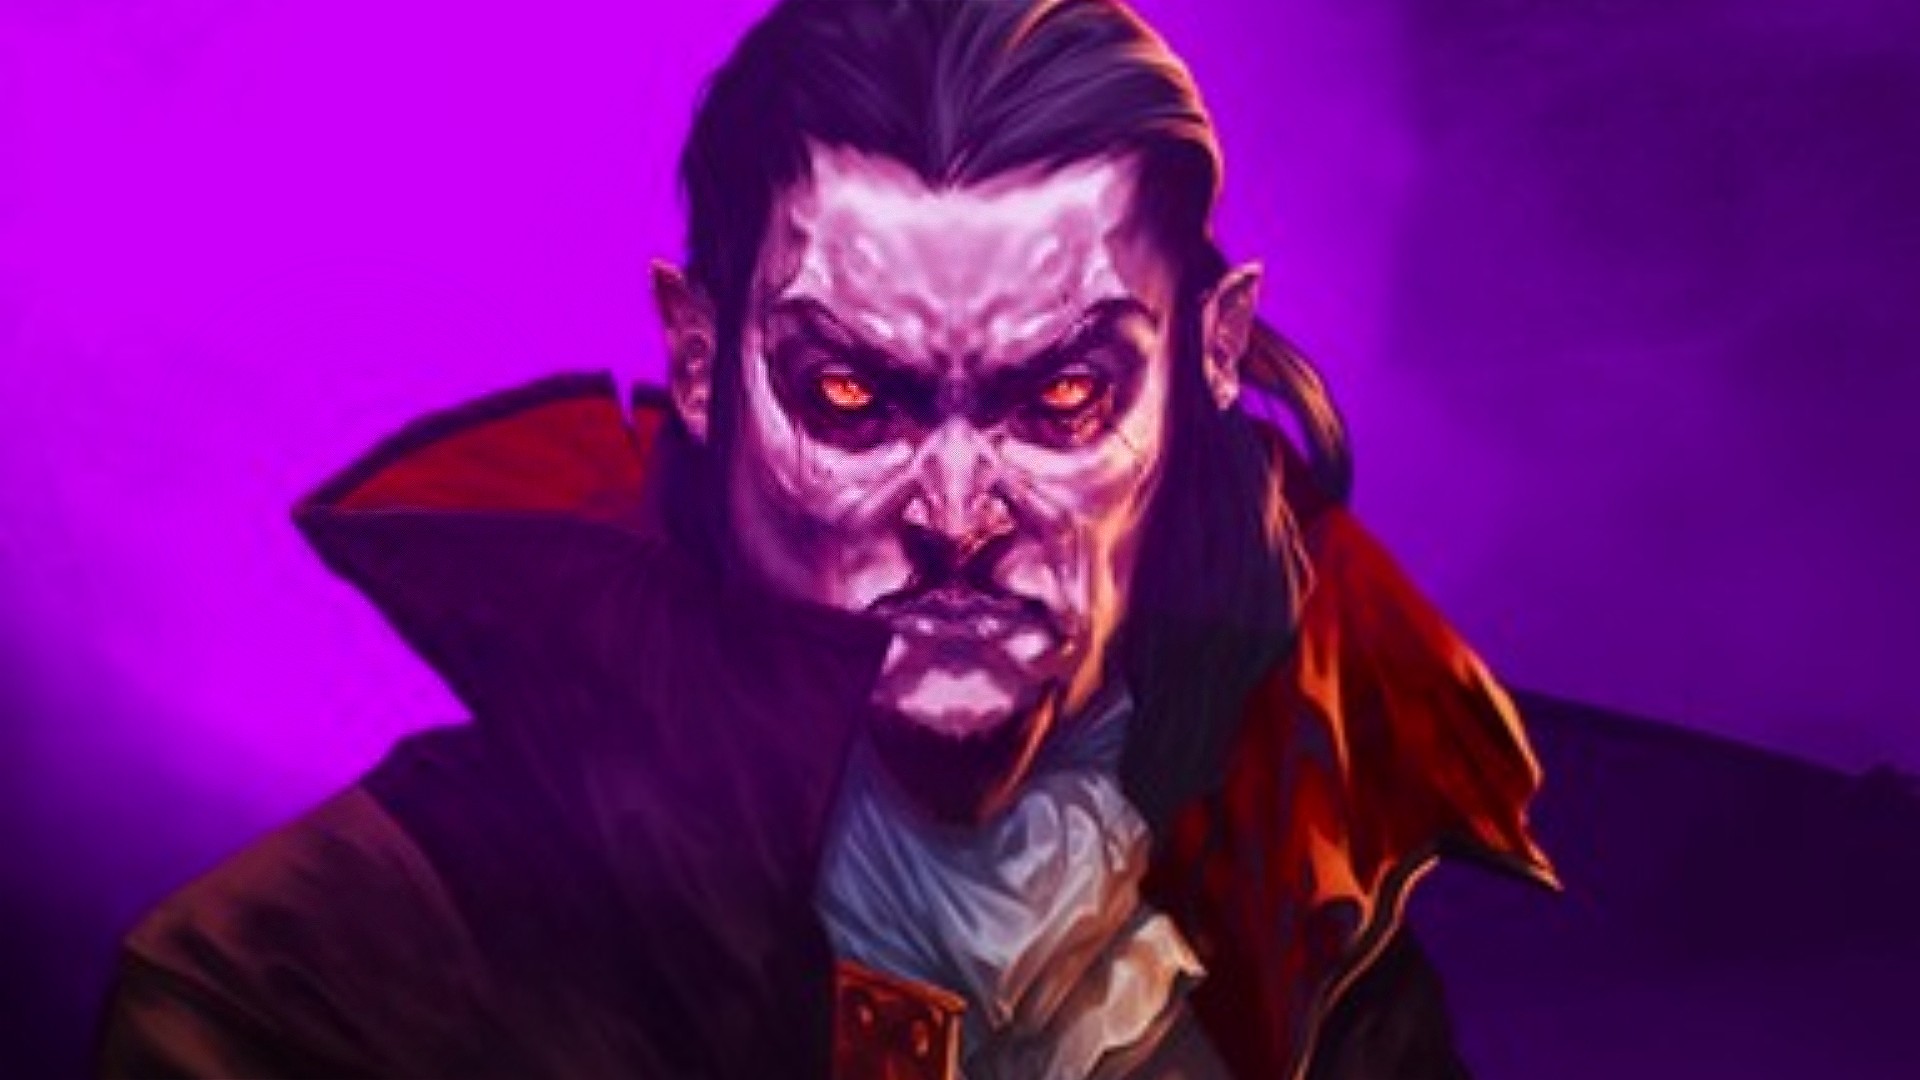 Vampire Survivors character unlock guide - Polygon